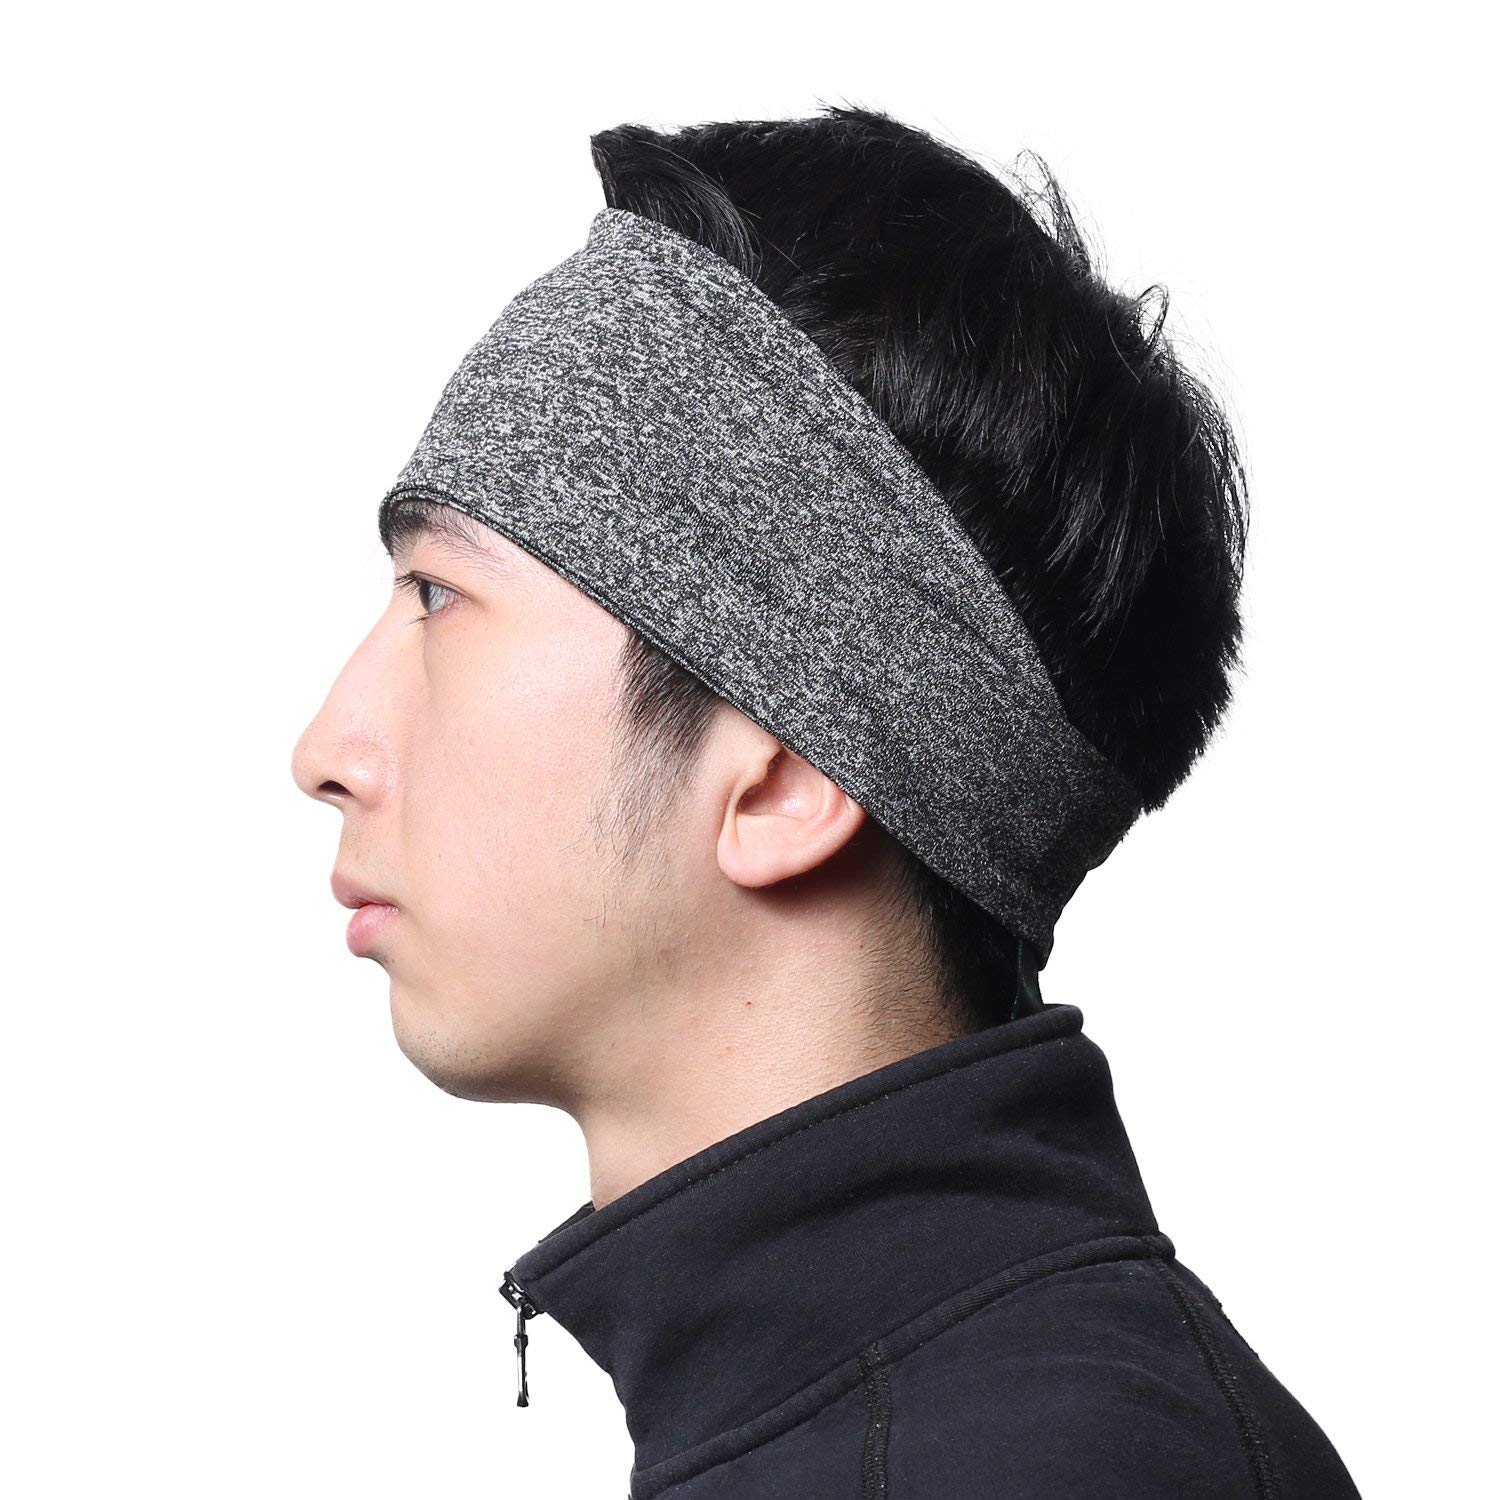 SUNMECI Headbands for Men Review